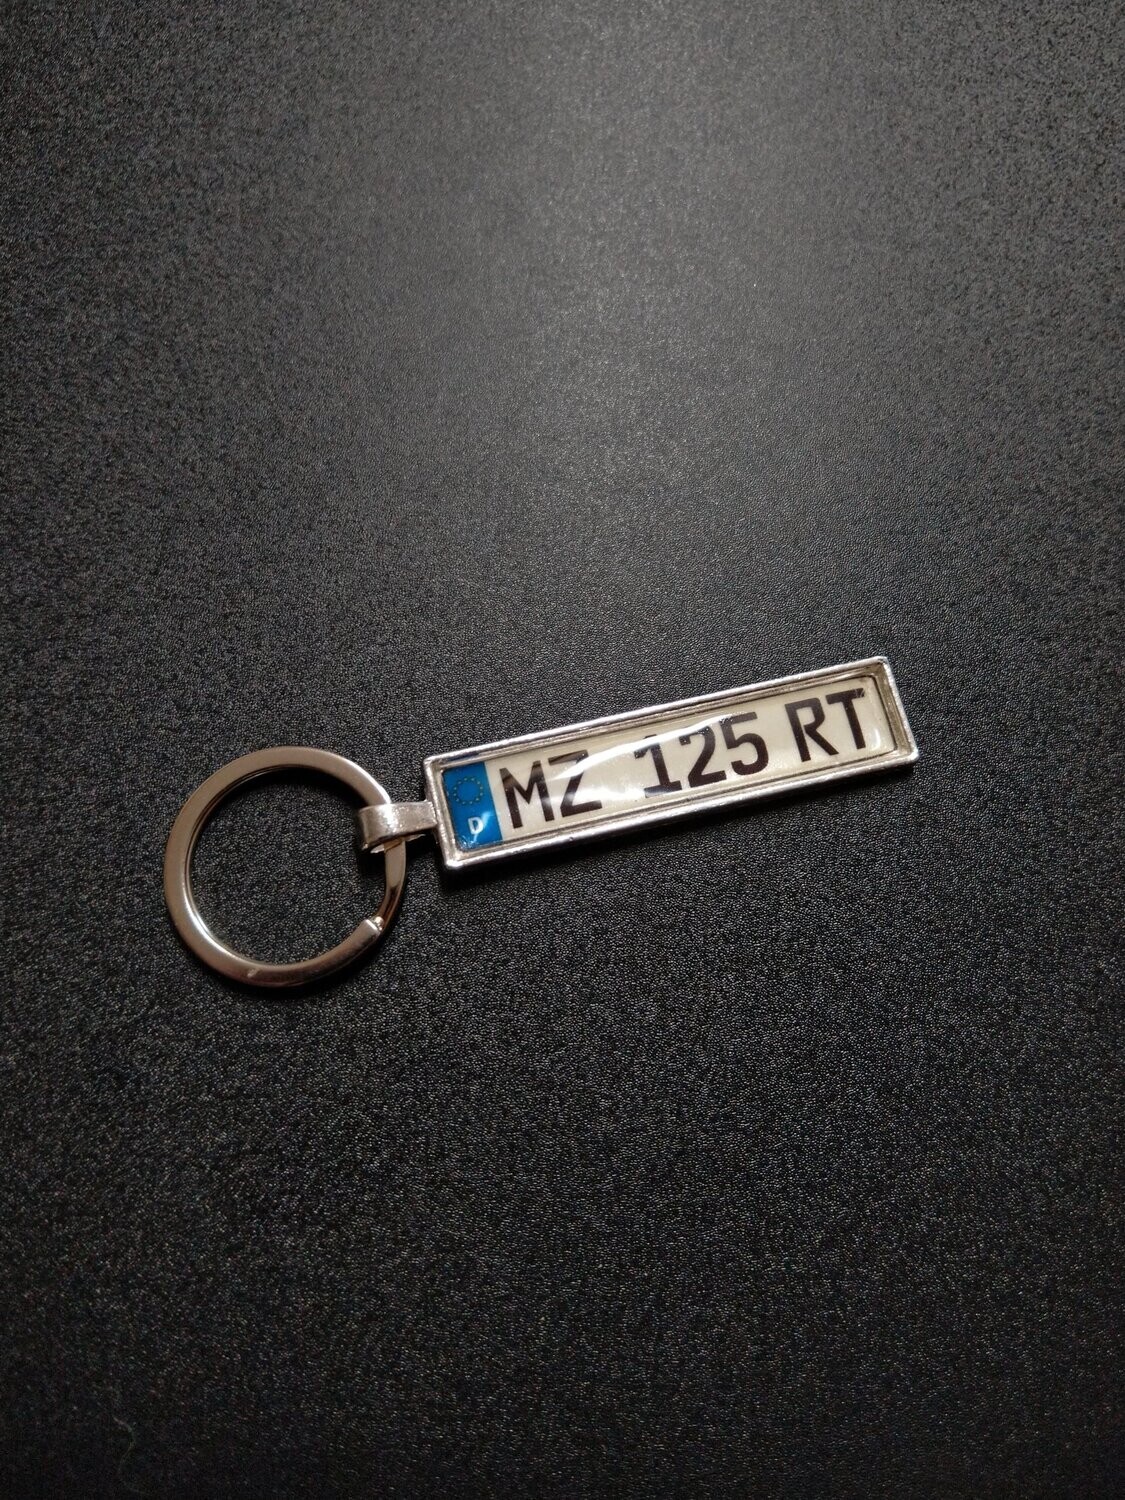 Schlüsselanhänger "MZ 125 RT"